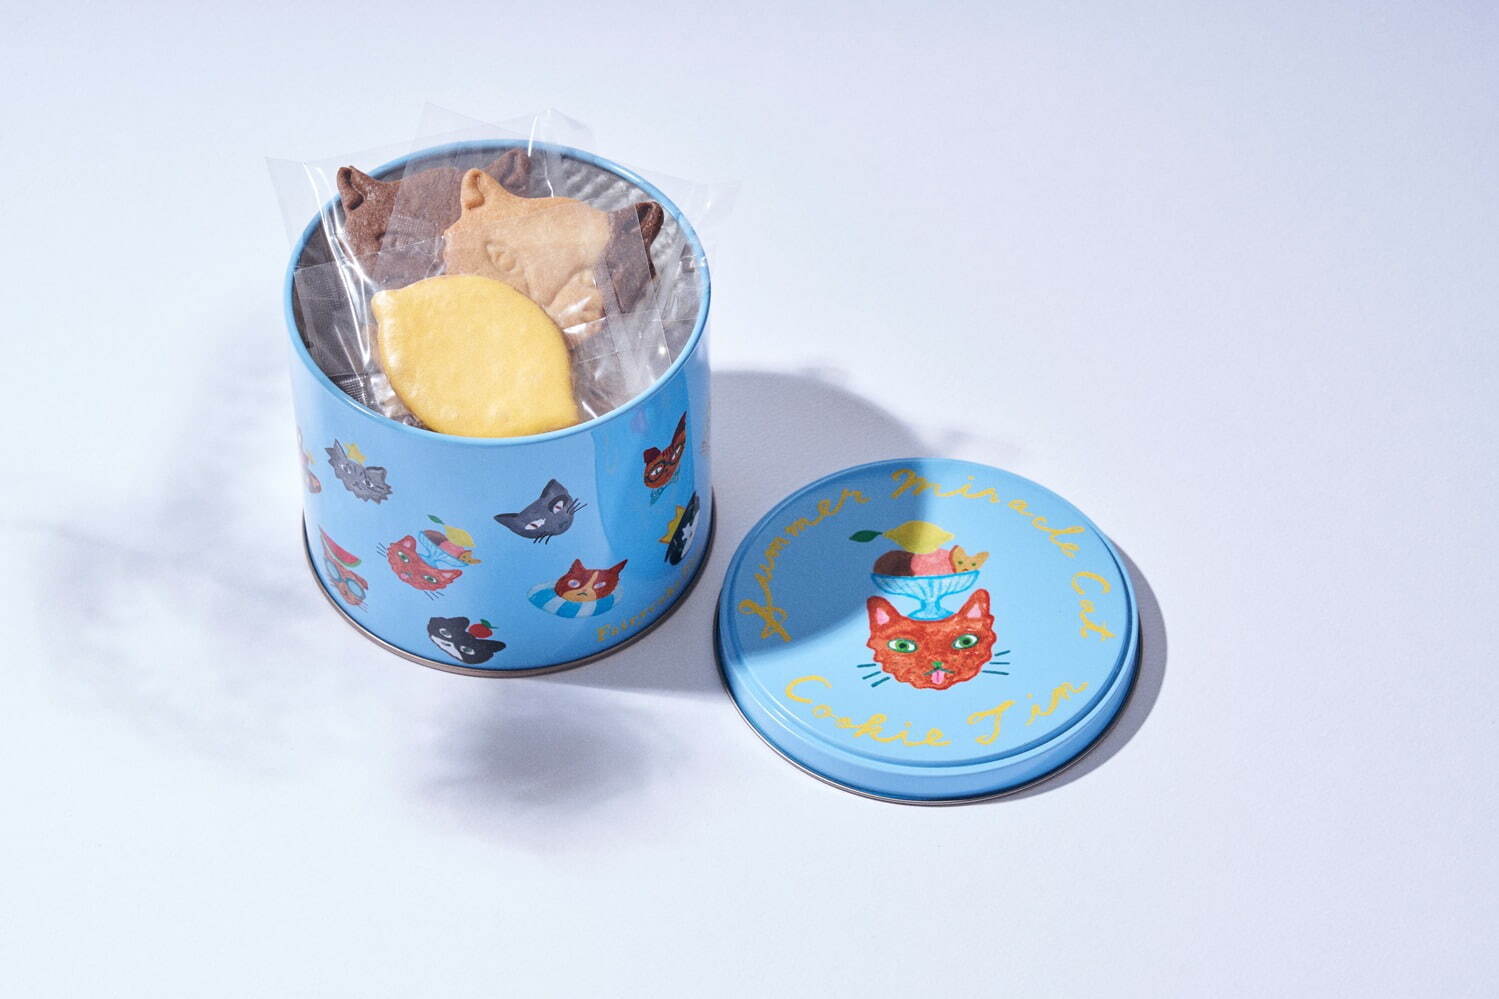 Summer Miracle Cat Cookie Tin 神様のいたずらサマーネコクッキー缶
2,650円